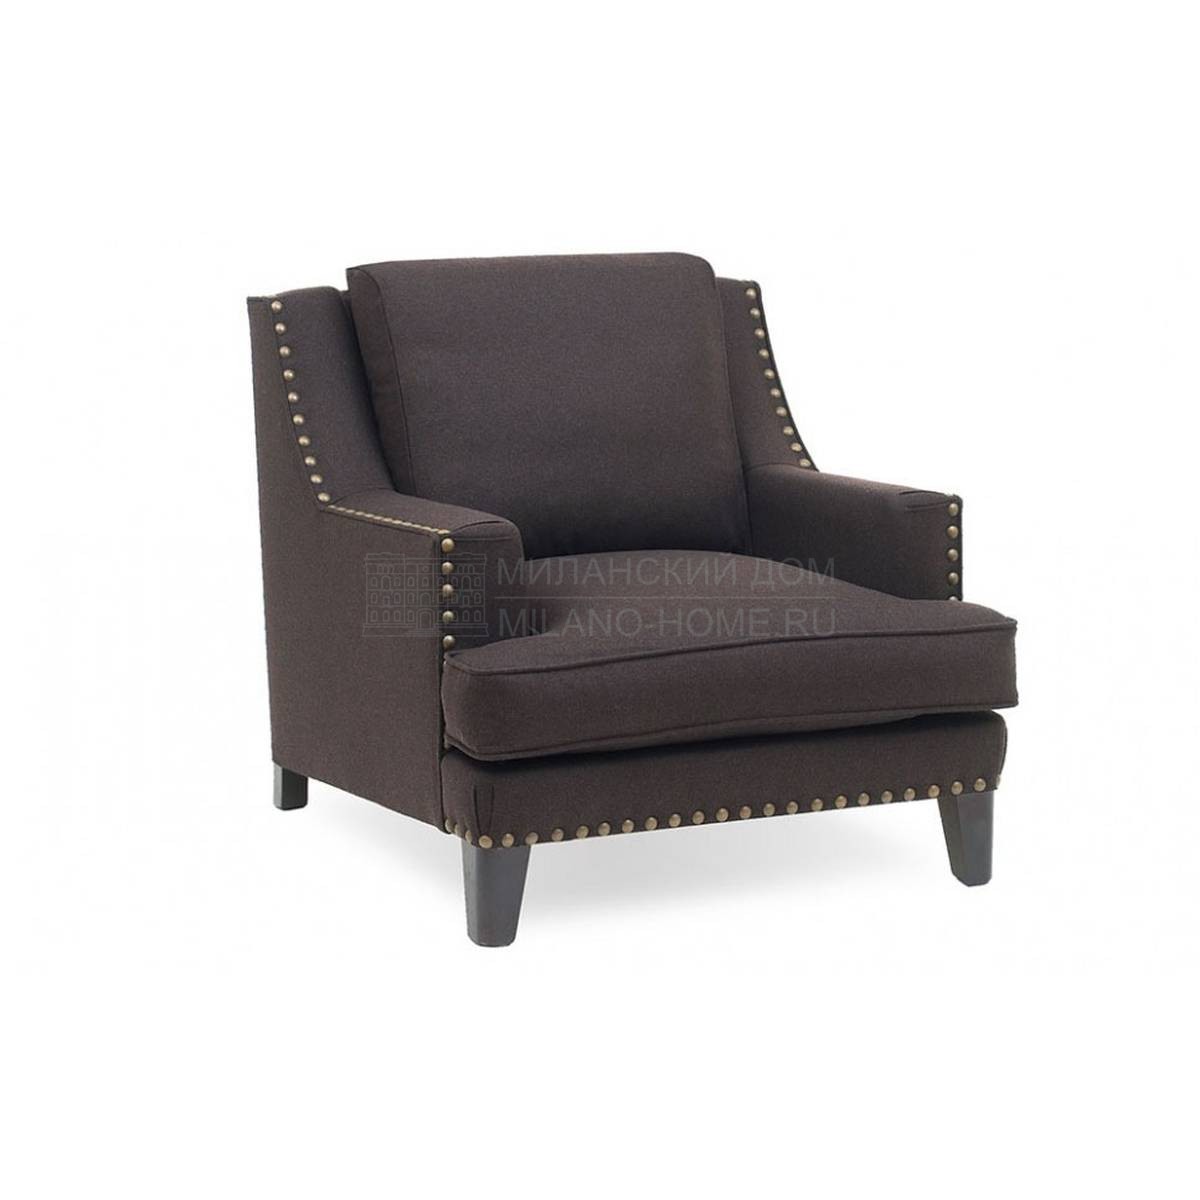 Кресло Oslo/armchair из Испании фабрики MANUEL LARRAGA